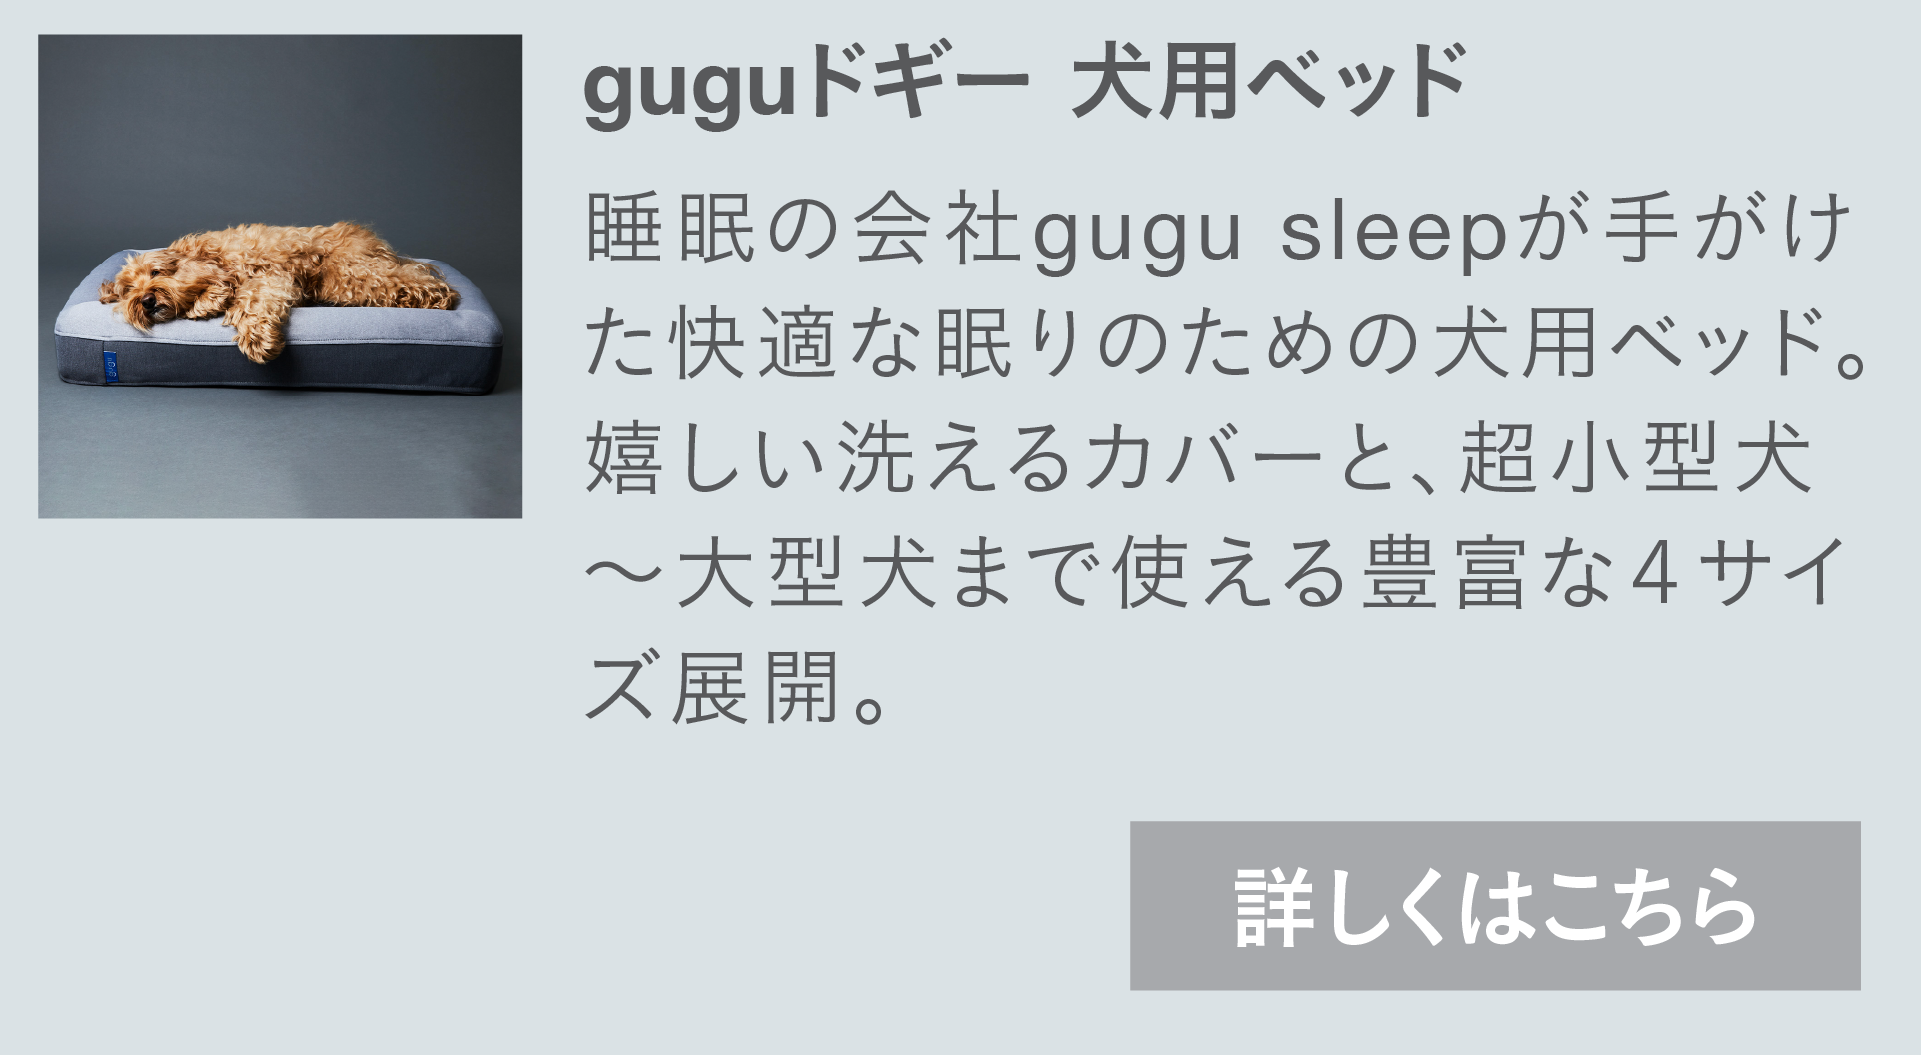 guguドギー 犬用ベッド。睡眠の会社gugu sleepが手がけた快適な眠りのための犬用ベッド。嬉しい洗えるカバーと、超小型犬〜大型犬まで使える豊富な4サイズ展開。